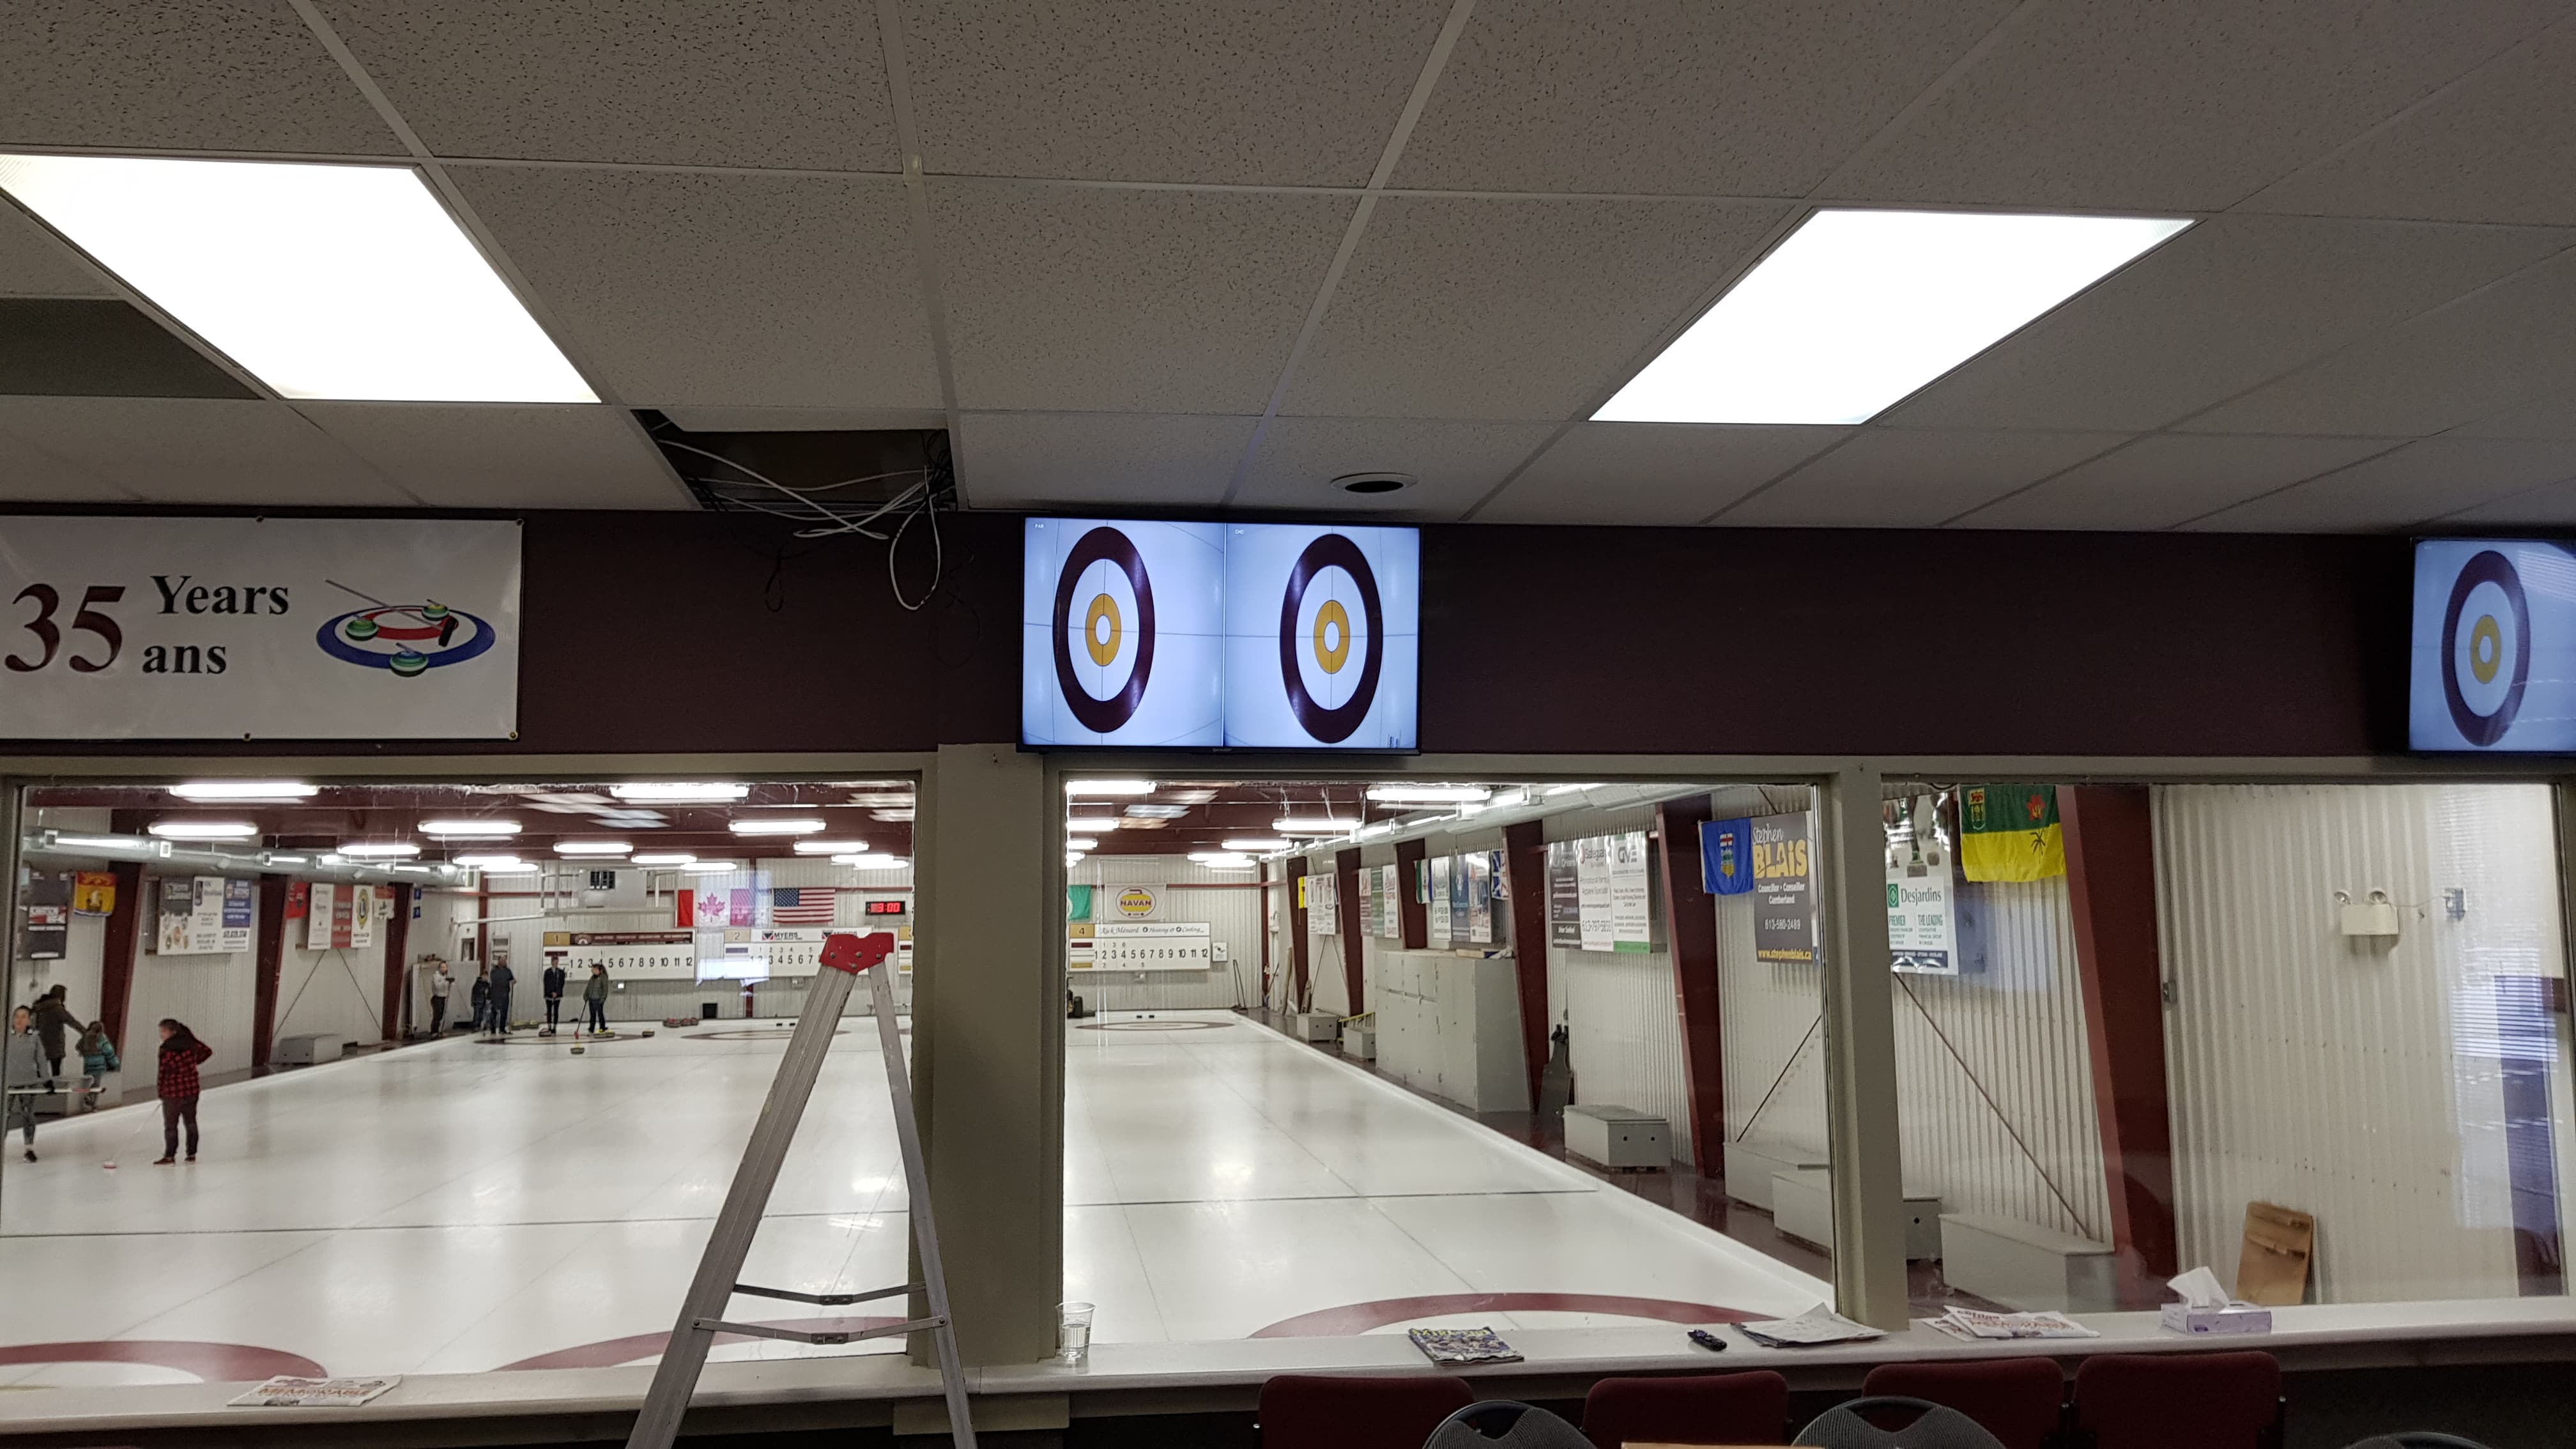 Live CCTV Camera TV Display for Curling Club